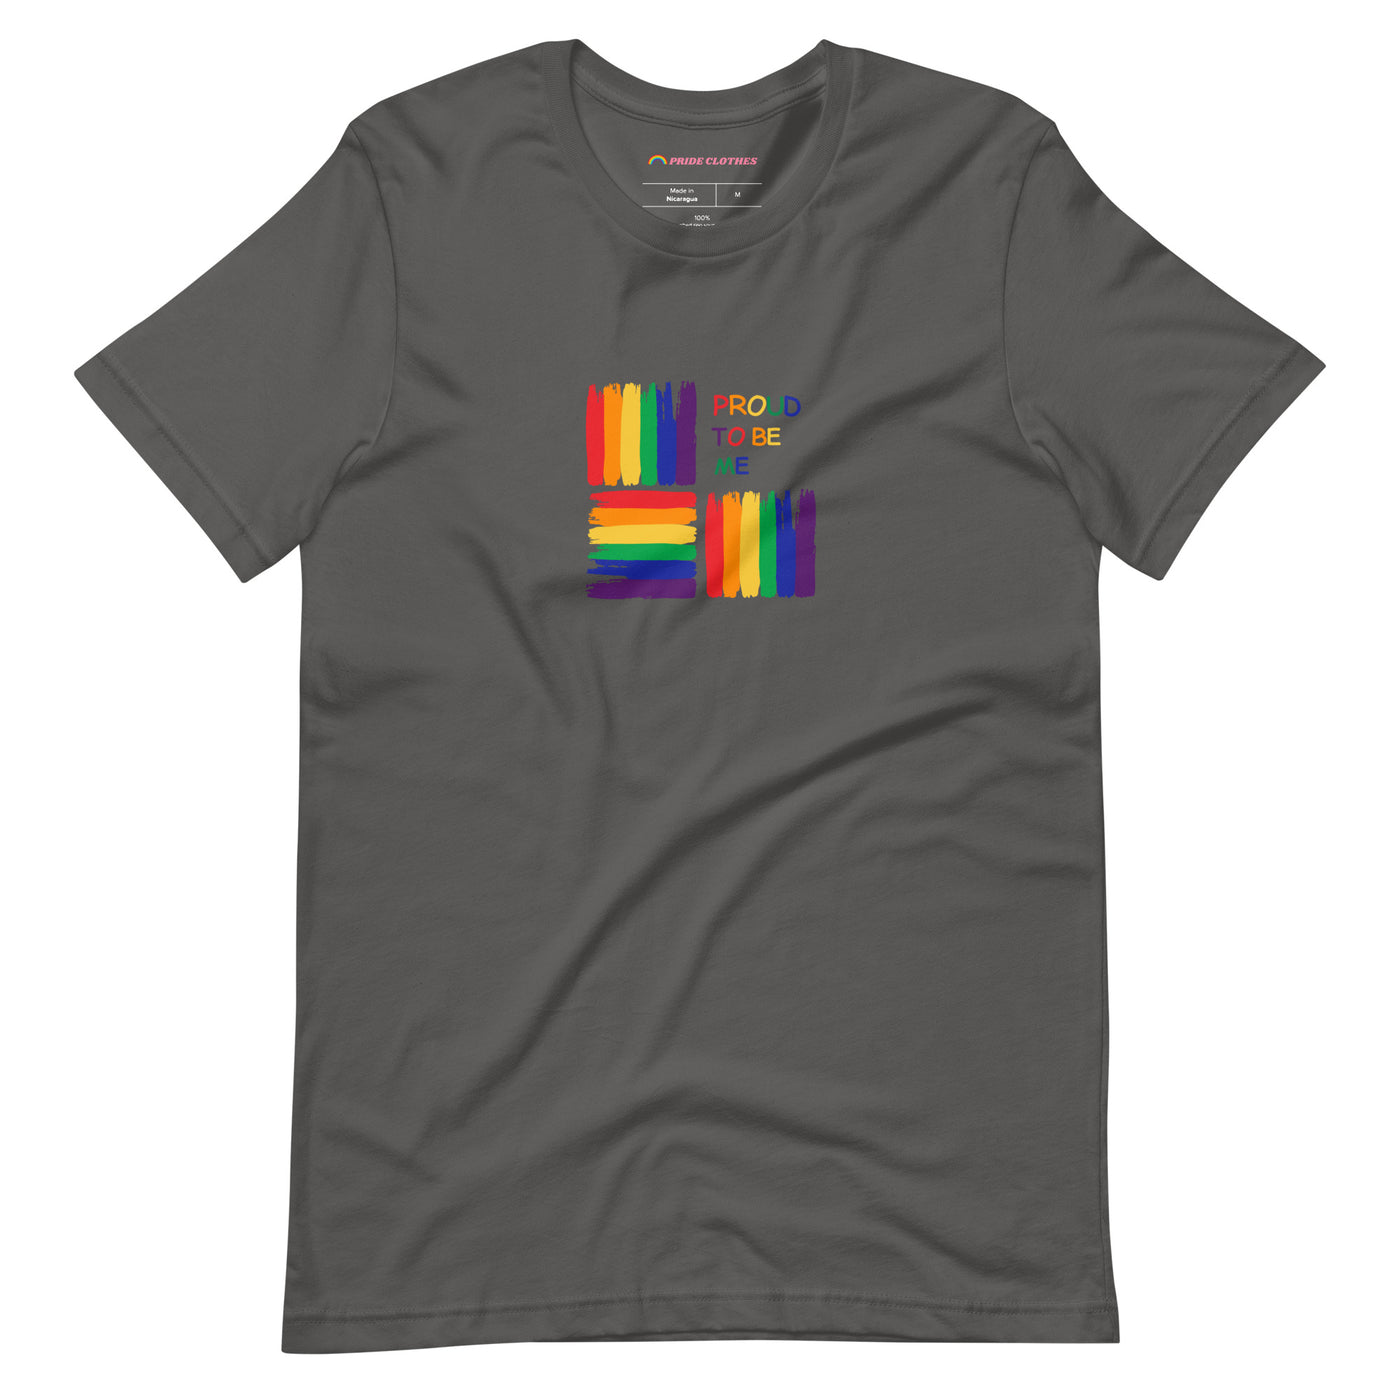 Pride Clothes - Around the Block Proud to Be Me Rainbow Pride T-Shirt - Asphalt